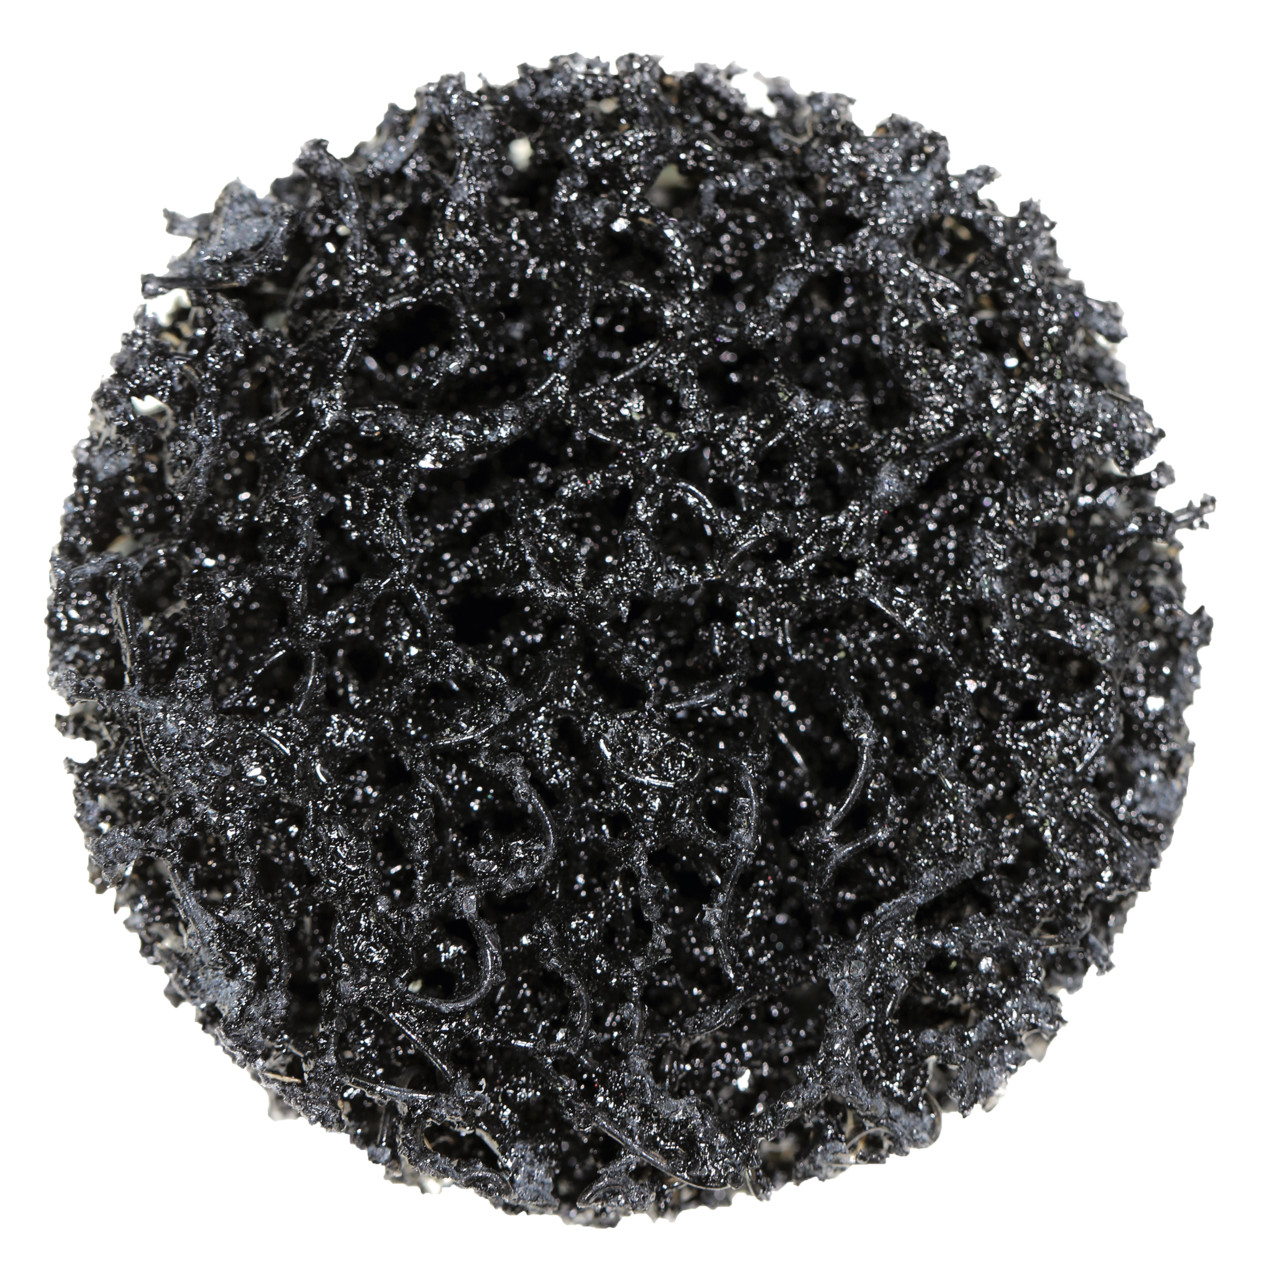 Disco per pulizia grossolana Tyrolit Dimensione 75xR Per acciaio, acciaio inox e PVC, A EX. GROB, forma: QDISC, Art. 34206232